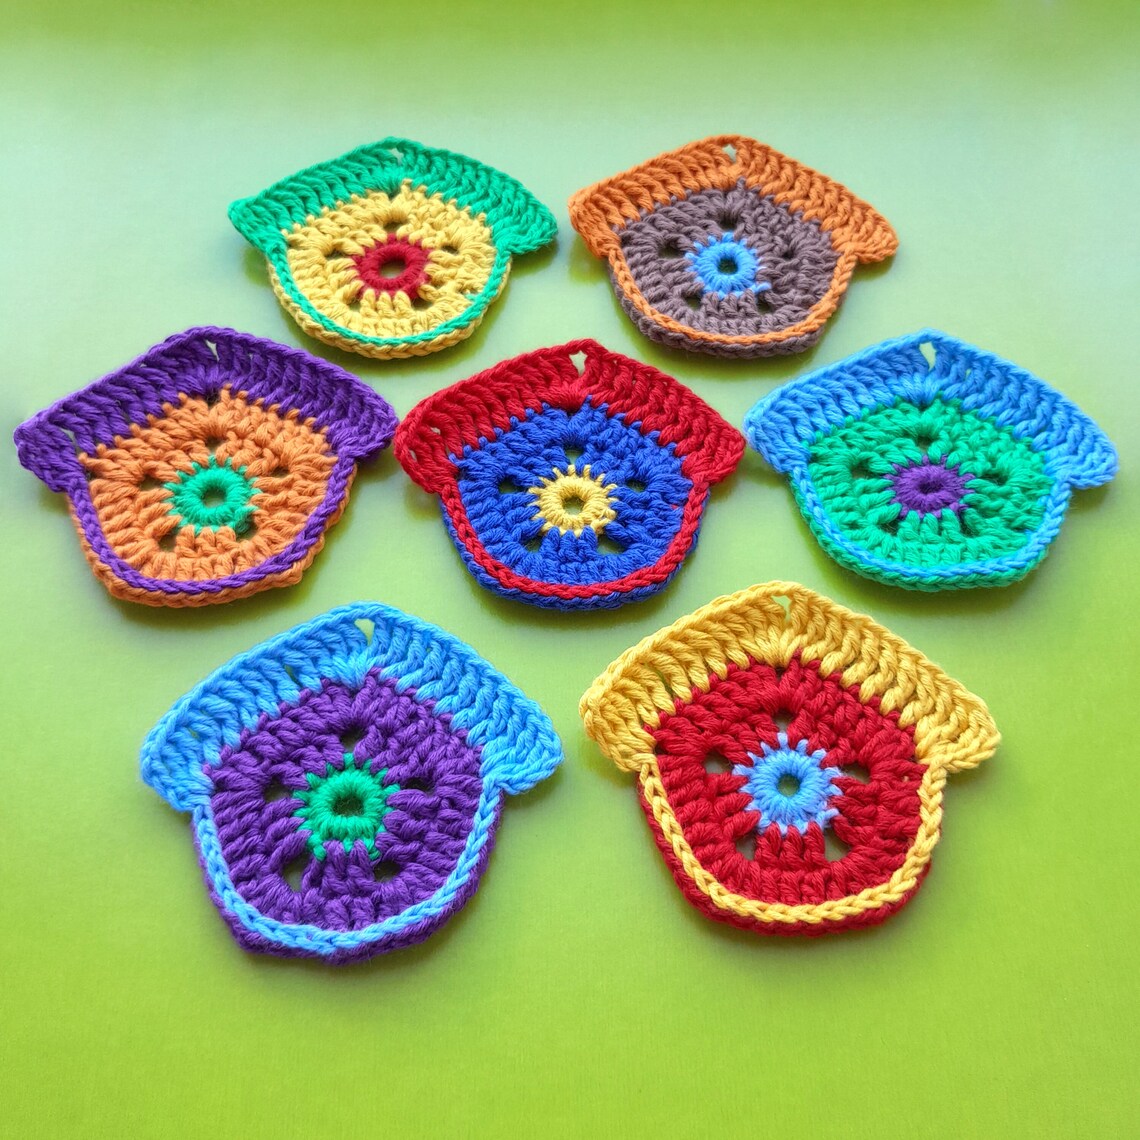 Crochet Christmas Houses Pattern, Crochet House Tree Pattern
etsy.com/listing/155432…

#Etsy #EtsyShop #EtsySeller #EtsySocial #crochet #GrannySquarePattern #crochetpattern #CrochetPatterns #grannysquare #grannysquares #crocheter #crocheting #crochetideas